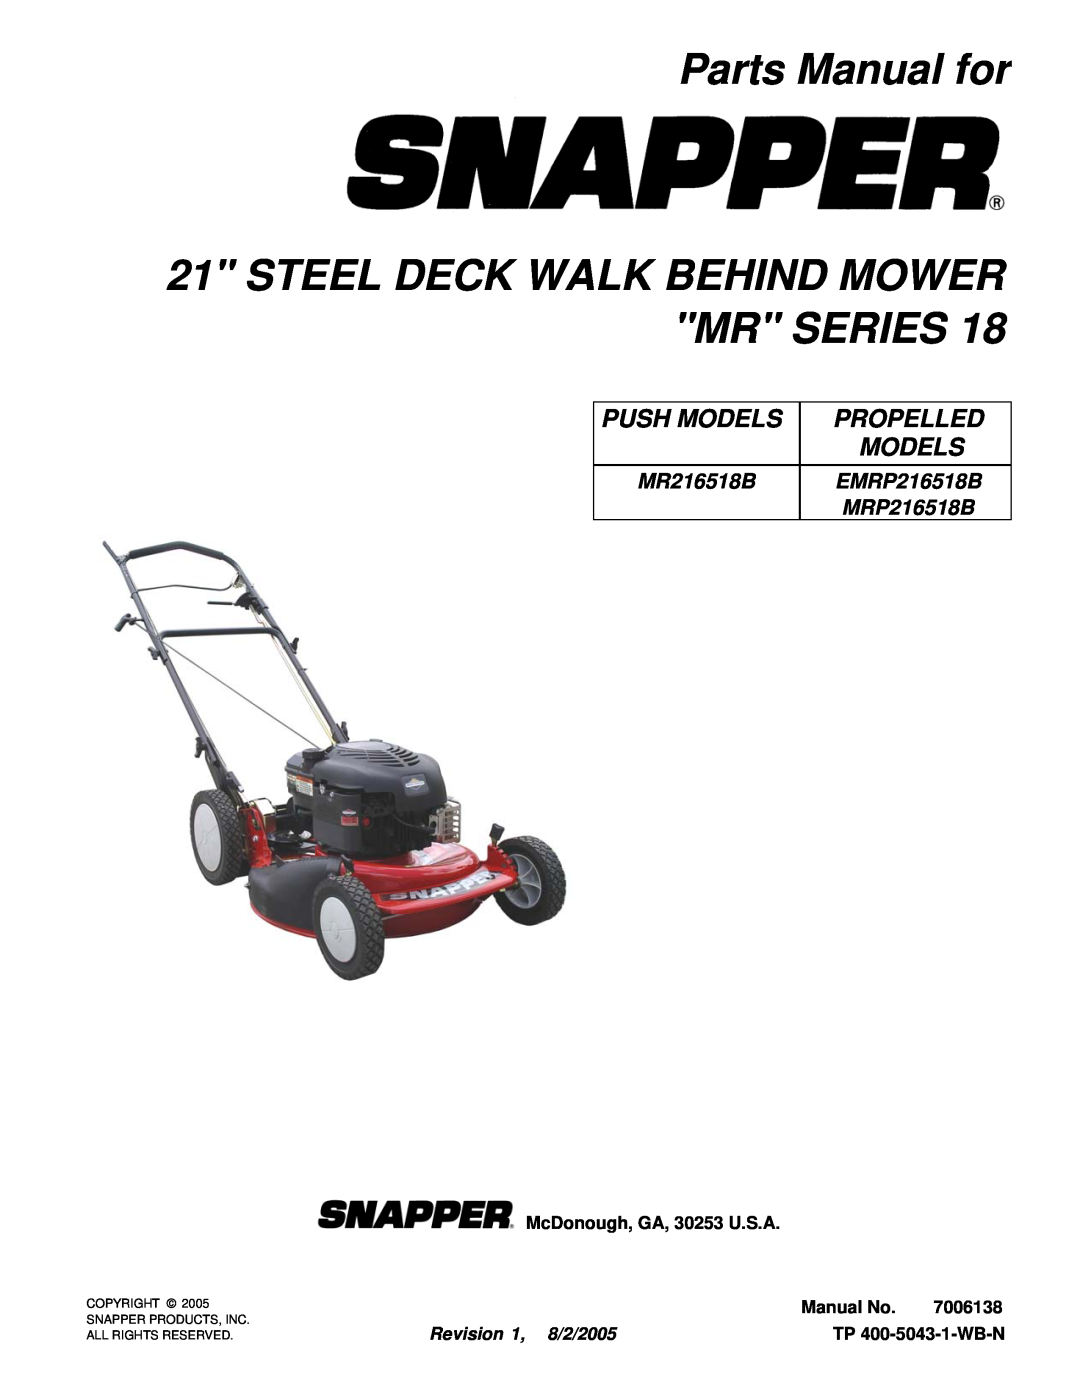 Snapper MR216518B manual Parts Manual for, Steel Deck Walk Behind Mower Mr Series, McDonough, GA, 30253 U.S.A, Manual No 